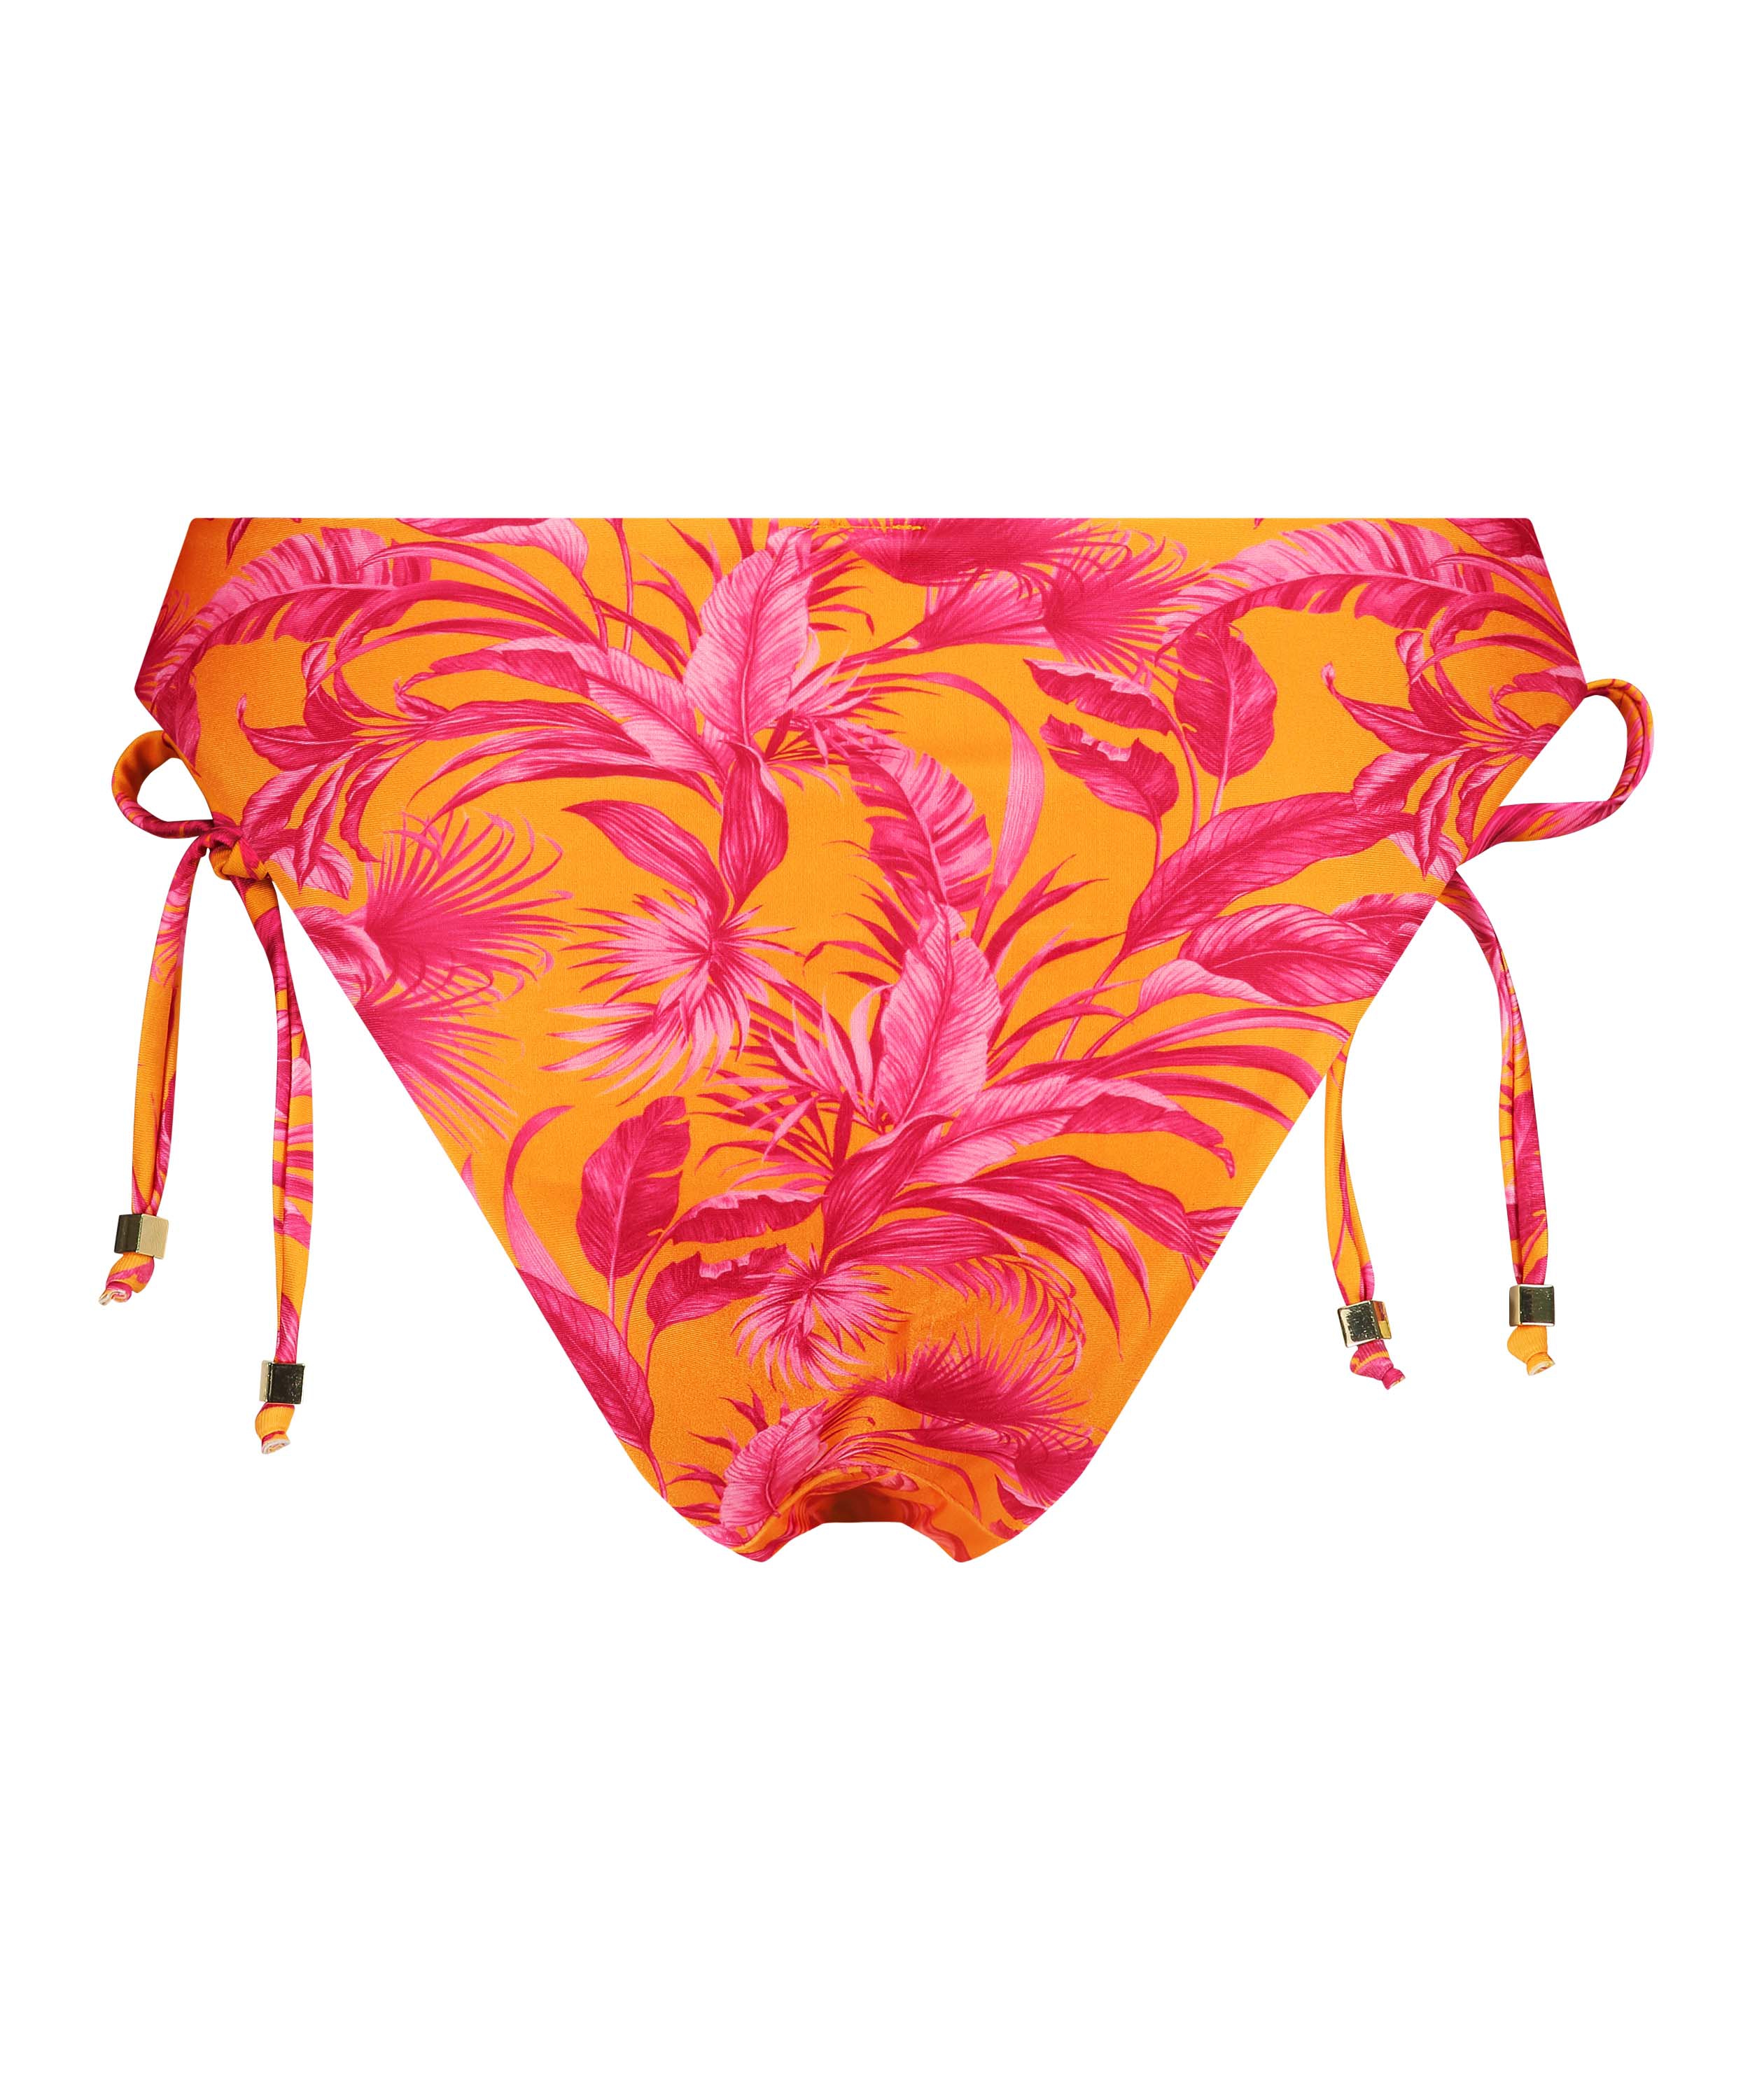 Braguita de bikini de corte alto Tulum, Rosa, main